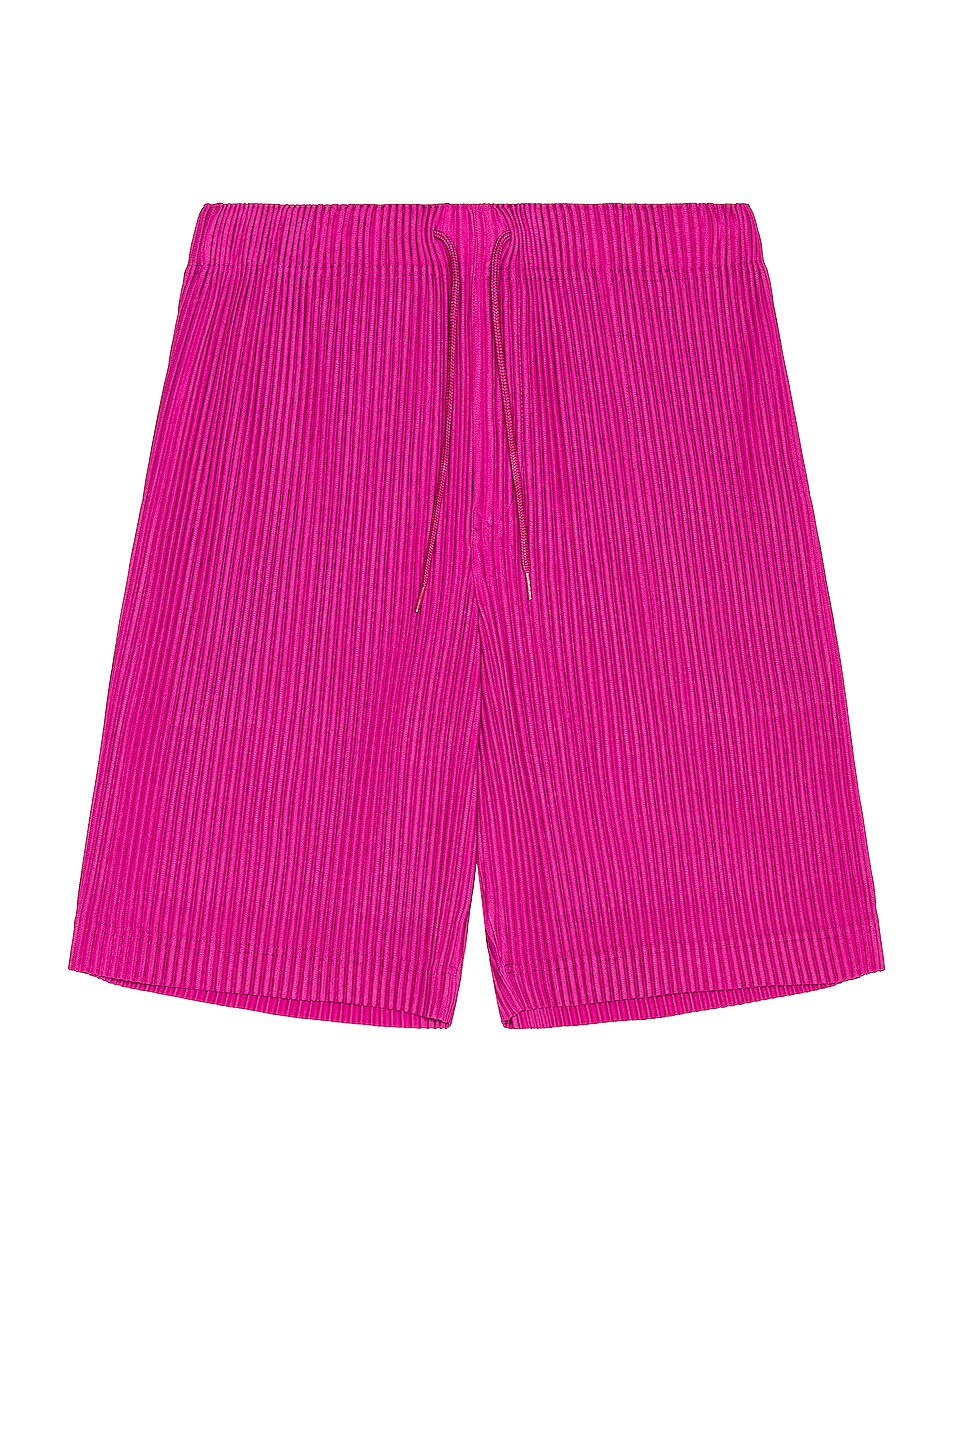 Image 1 of Homme Plisse Issey Miyake Shorts in Magenta Pink